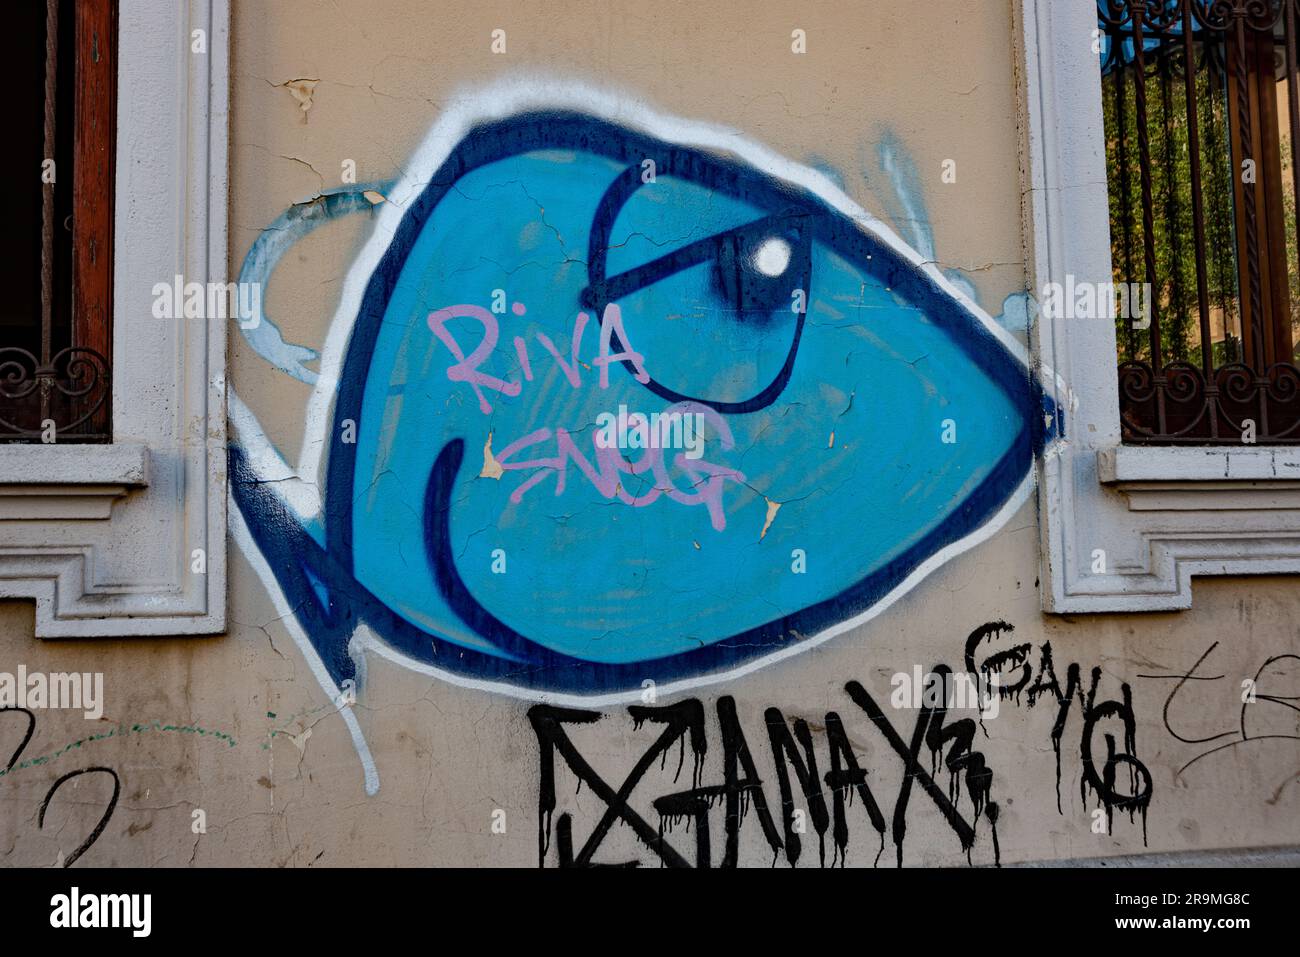 Milan graffiti street art. Fish like character Stock Photo